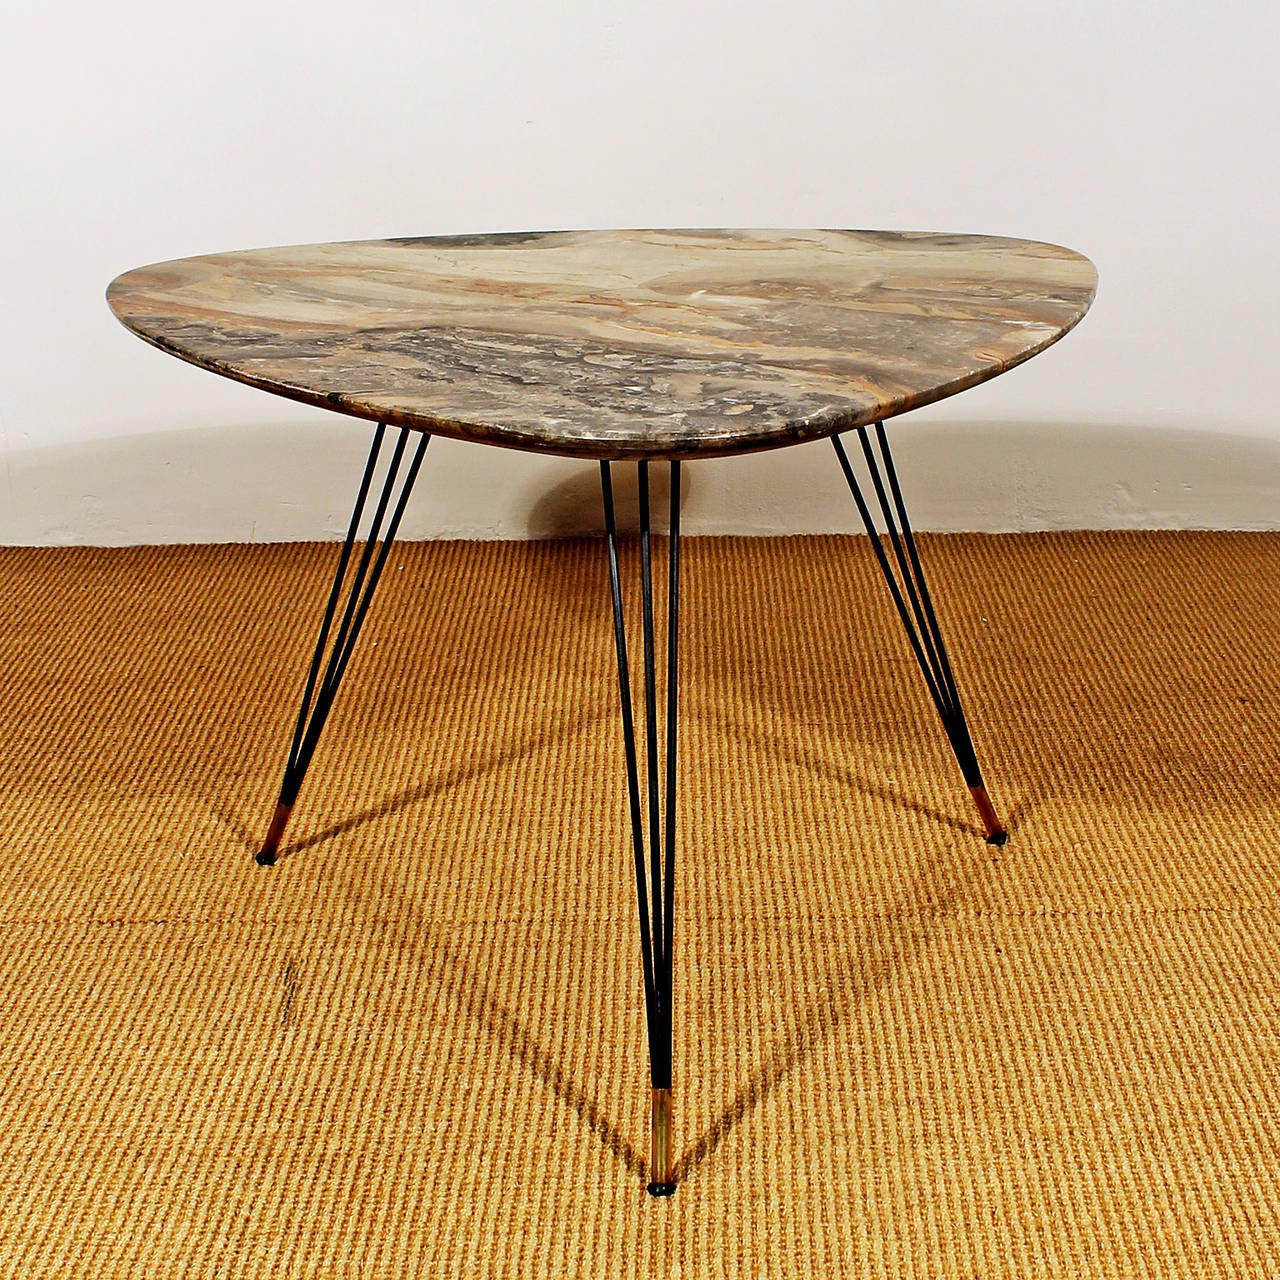 Mid-Century Modern Italian tripod coffee table from the 1950s